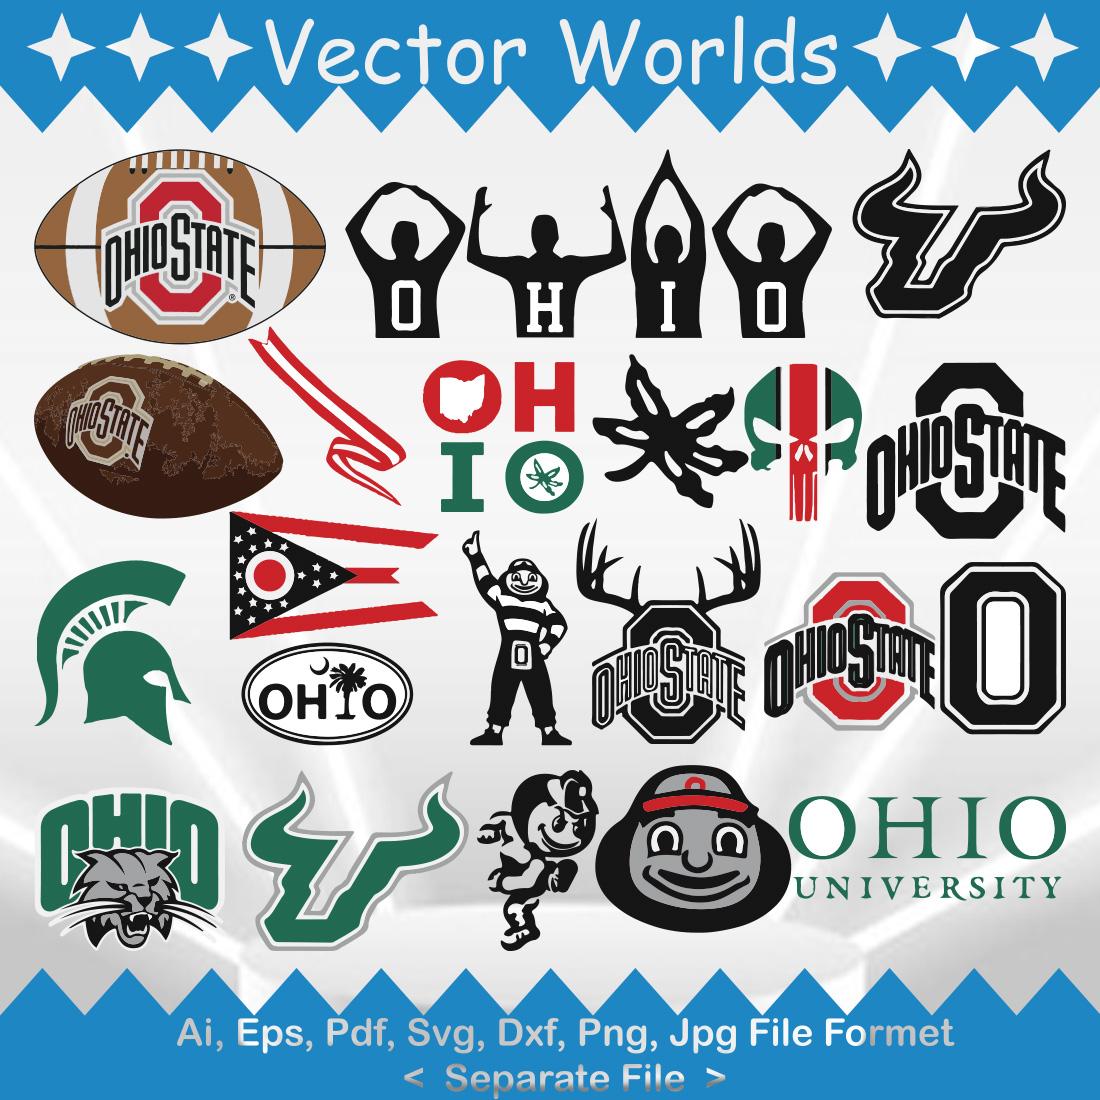 Ohio State SVG Vector Design cover image.